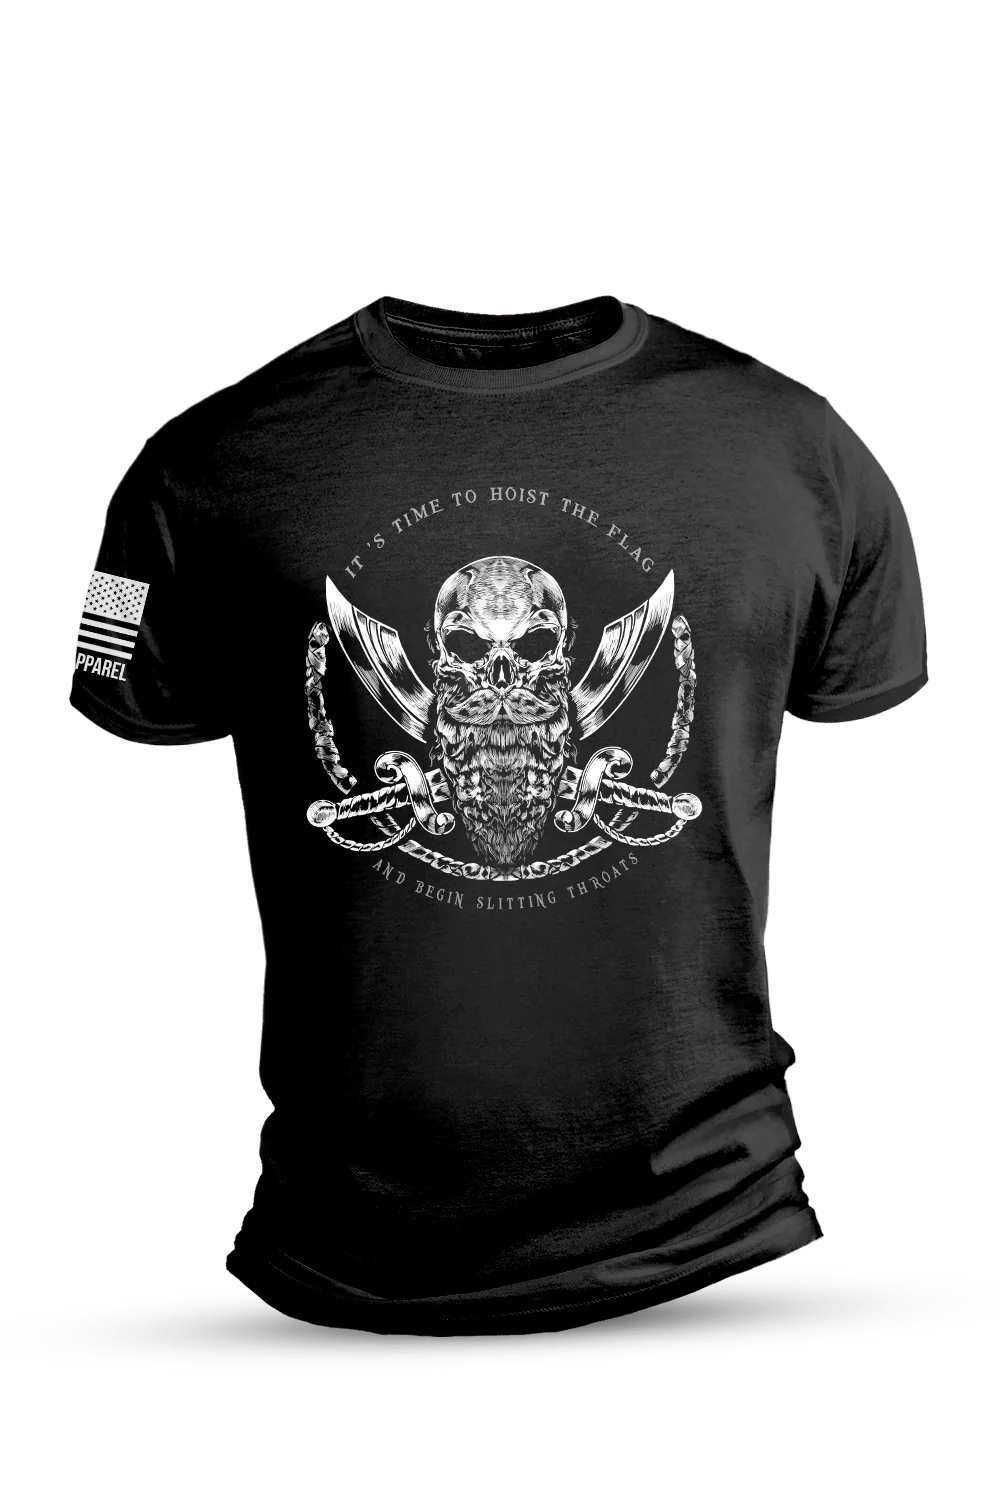 Nine Line T-Shirt - HOIST THE BLACK FLAG posted by ProdOrigin USA in Men's Apparel